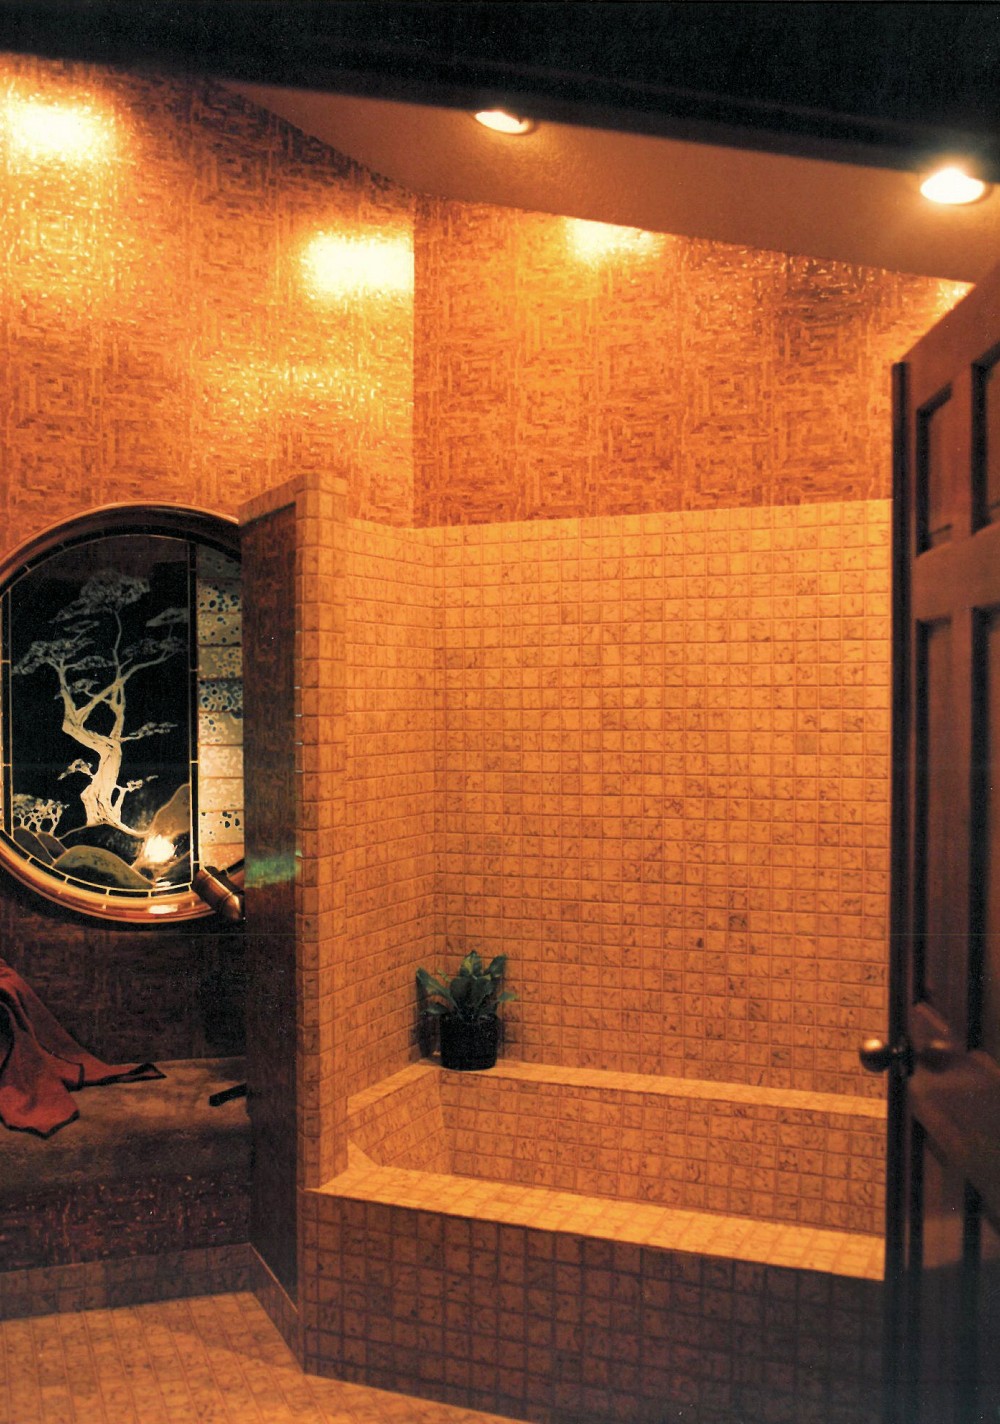 1980 Excelsior - tiled bathroom with round window - custom home by Rick Bernard Custom Homes.